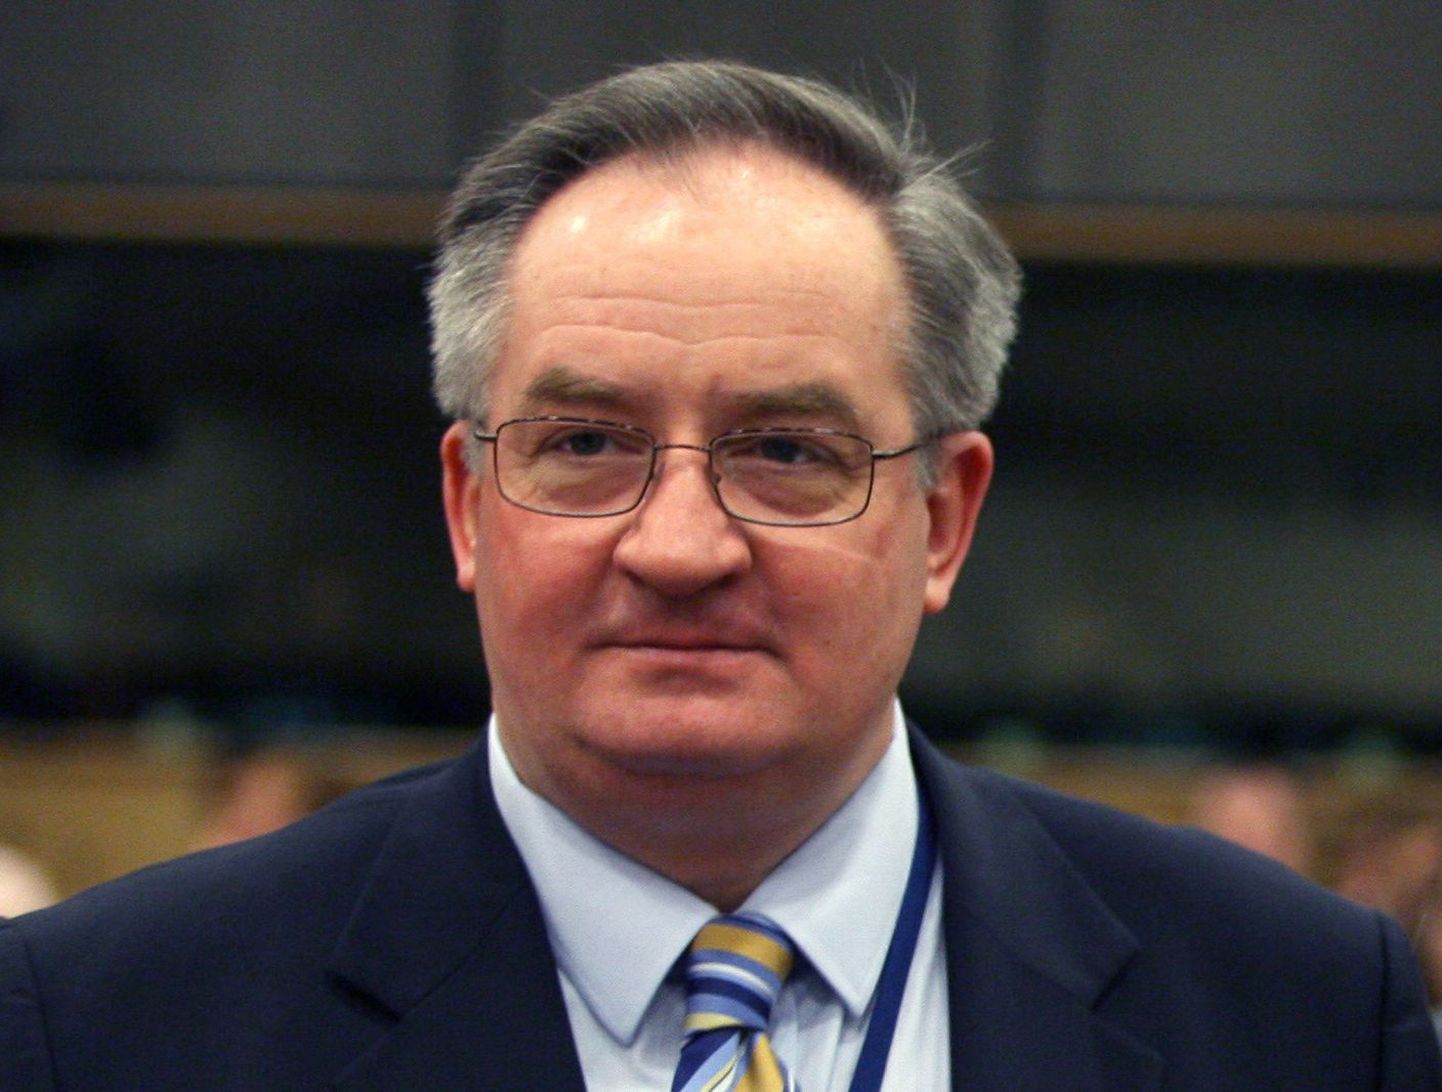 Donald Tuski vastaskandidaat Jacek Saryusz-Wolski